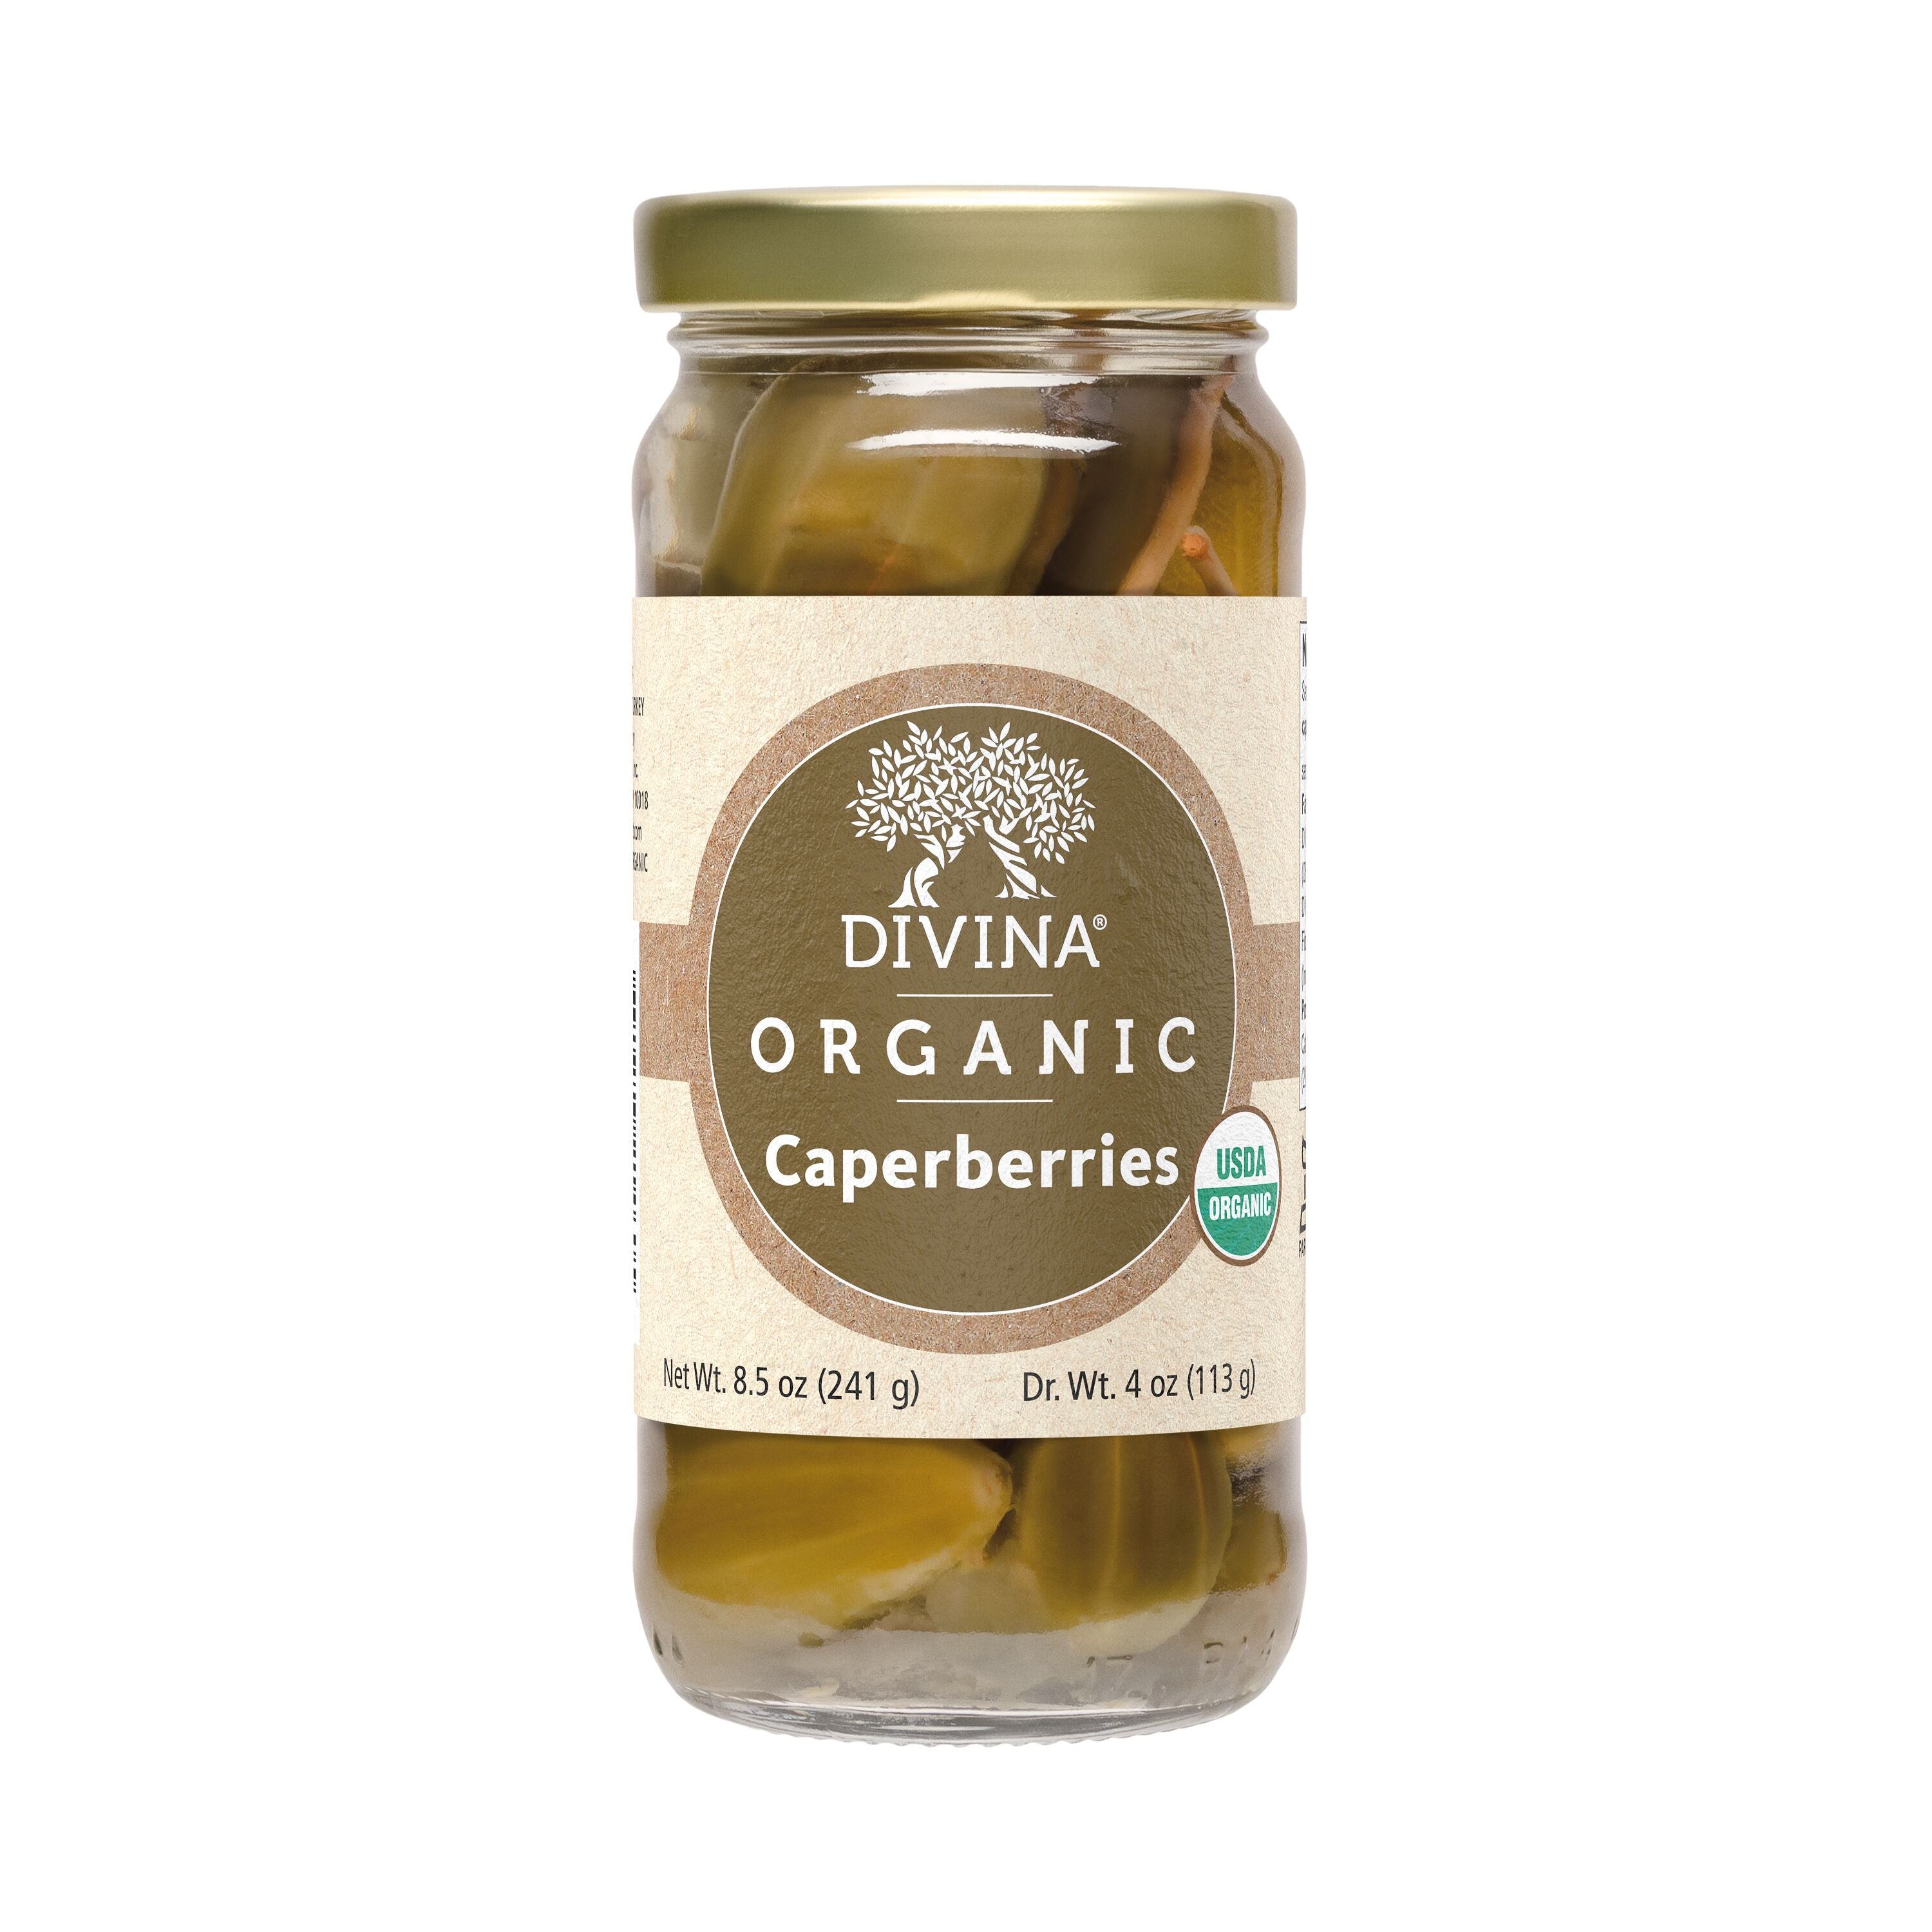 Organic Caperberries